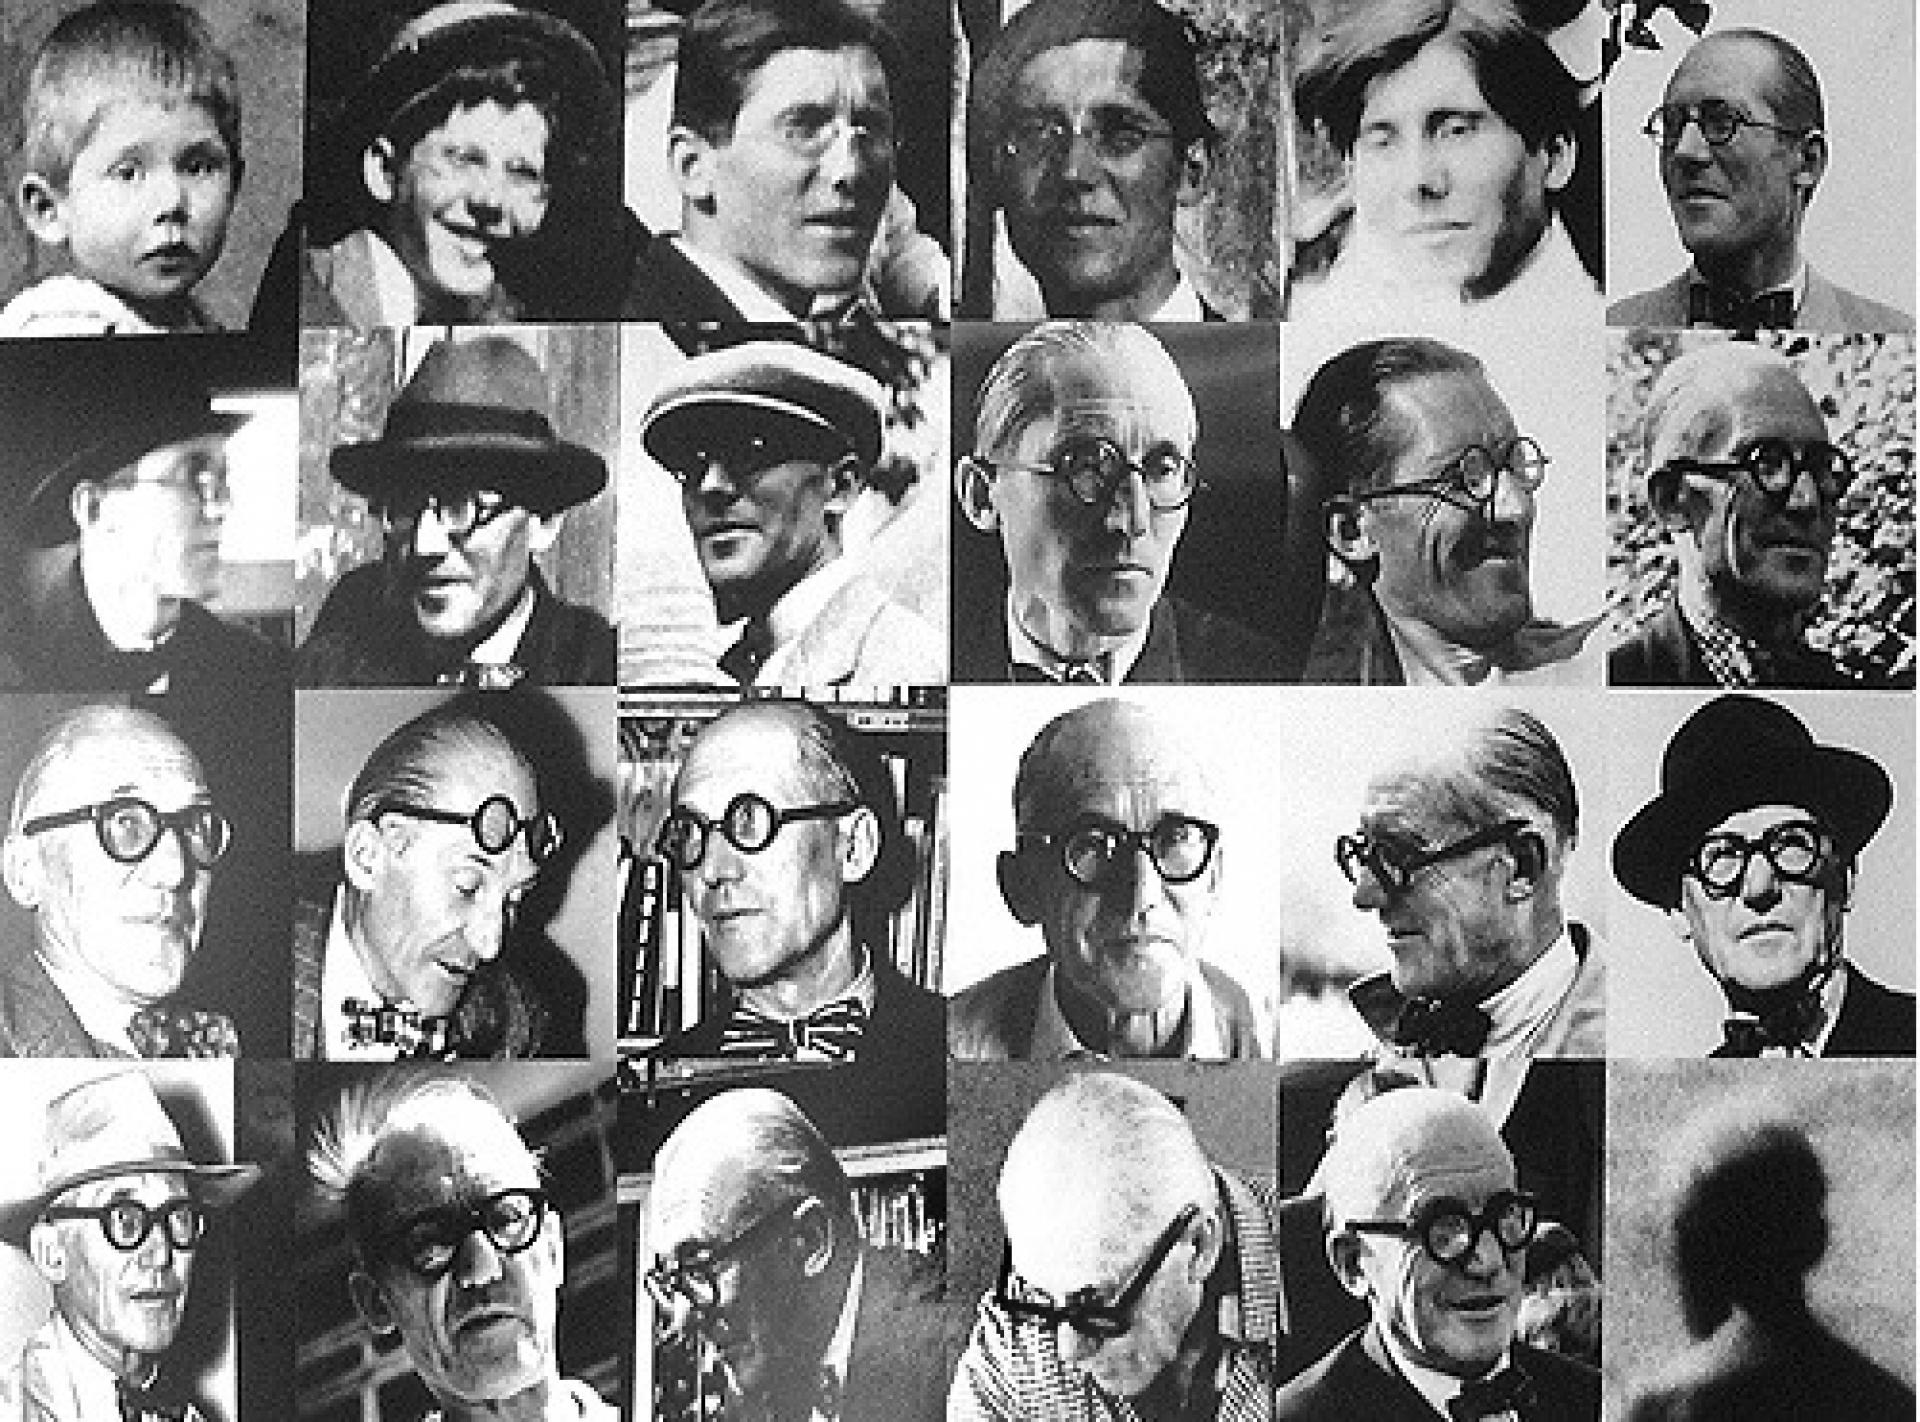 Le Corbusier, building an icon through eyeglasses | Photo via Object